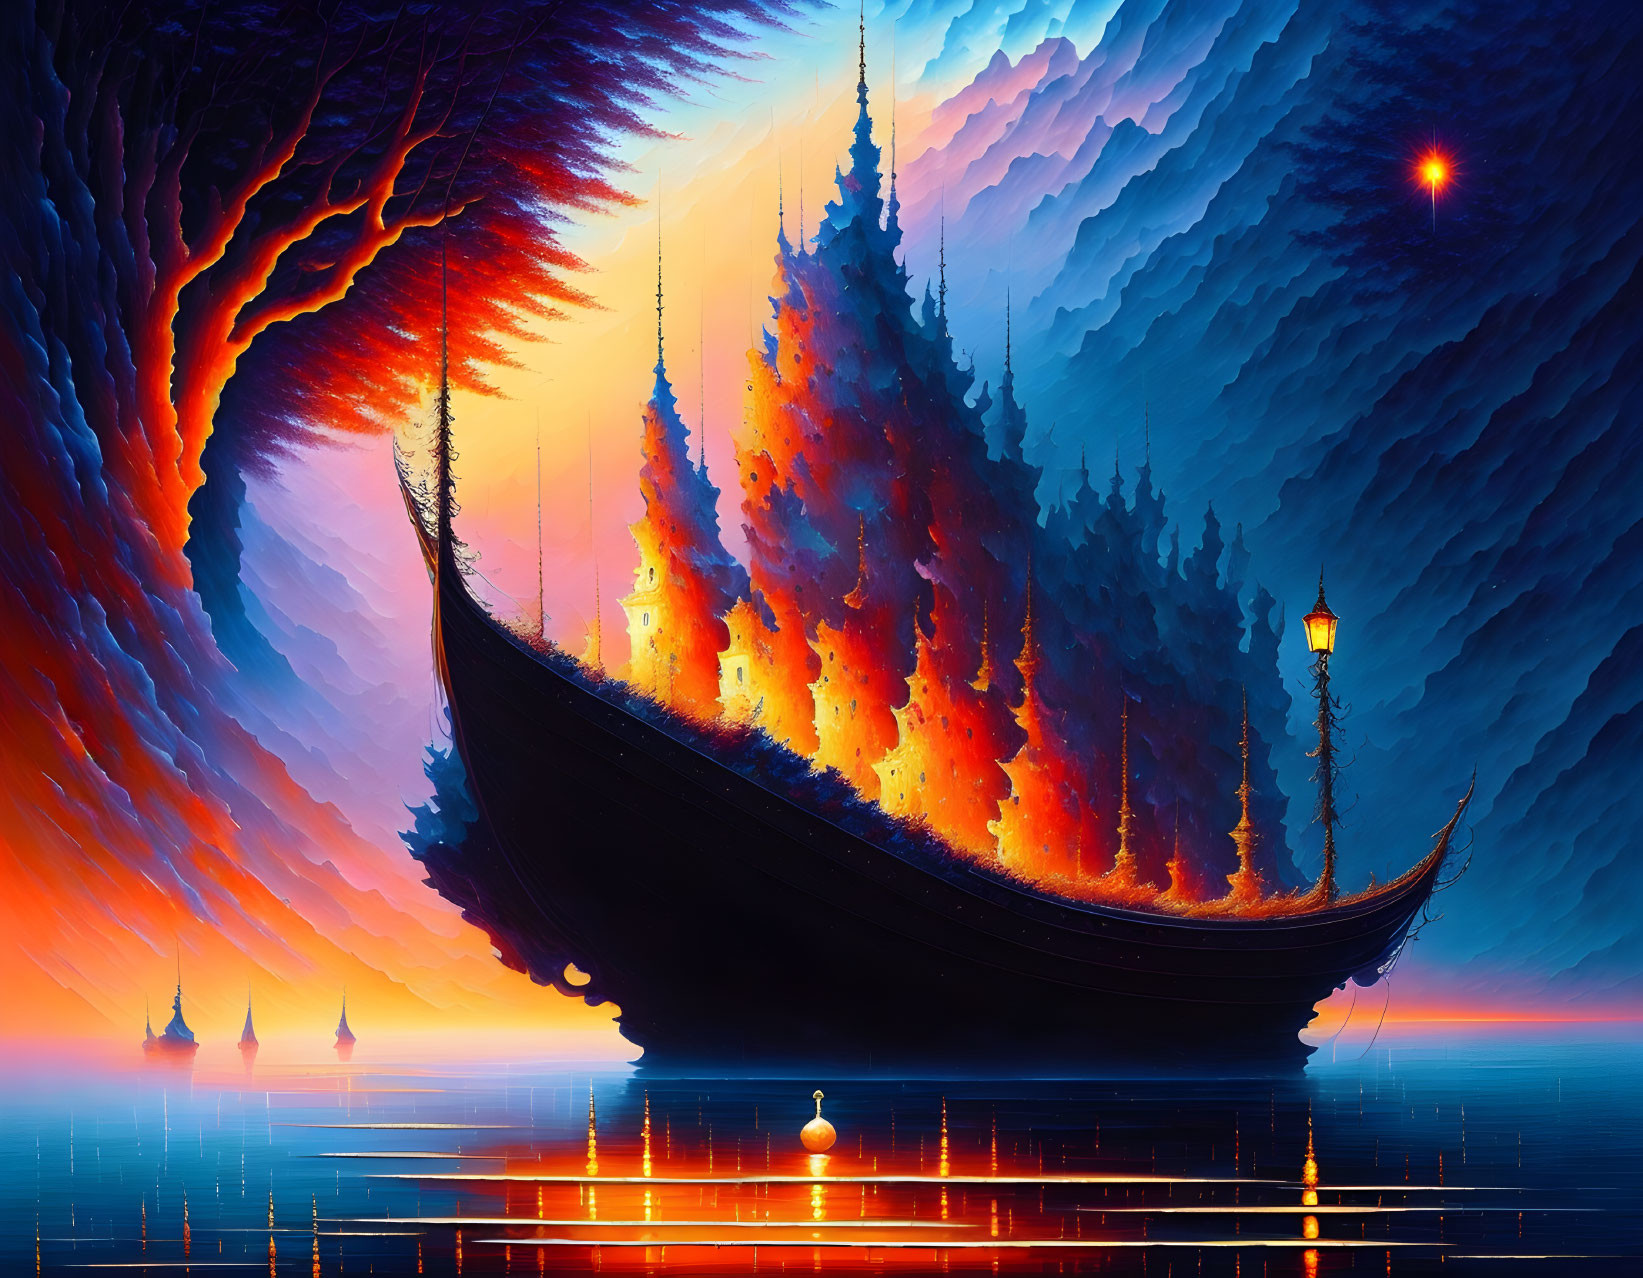 Digital artwork: Fiery forest on floating ship under electrifying sky